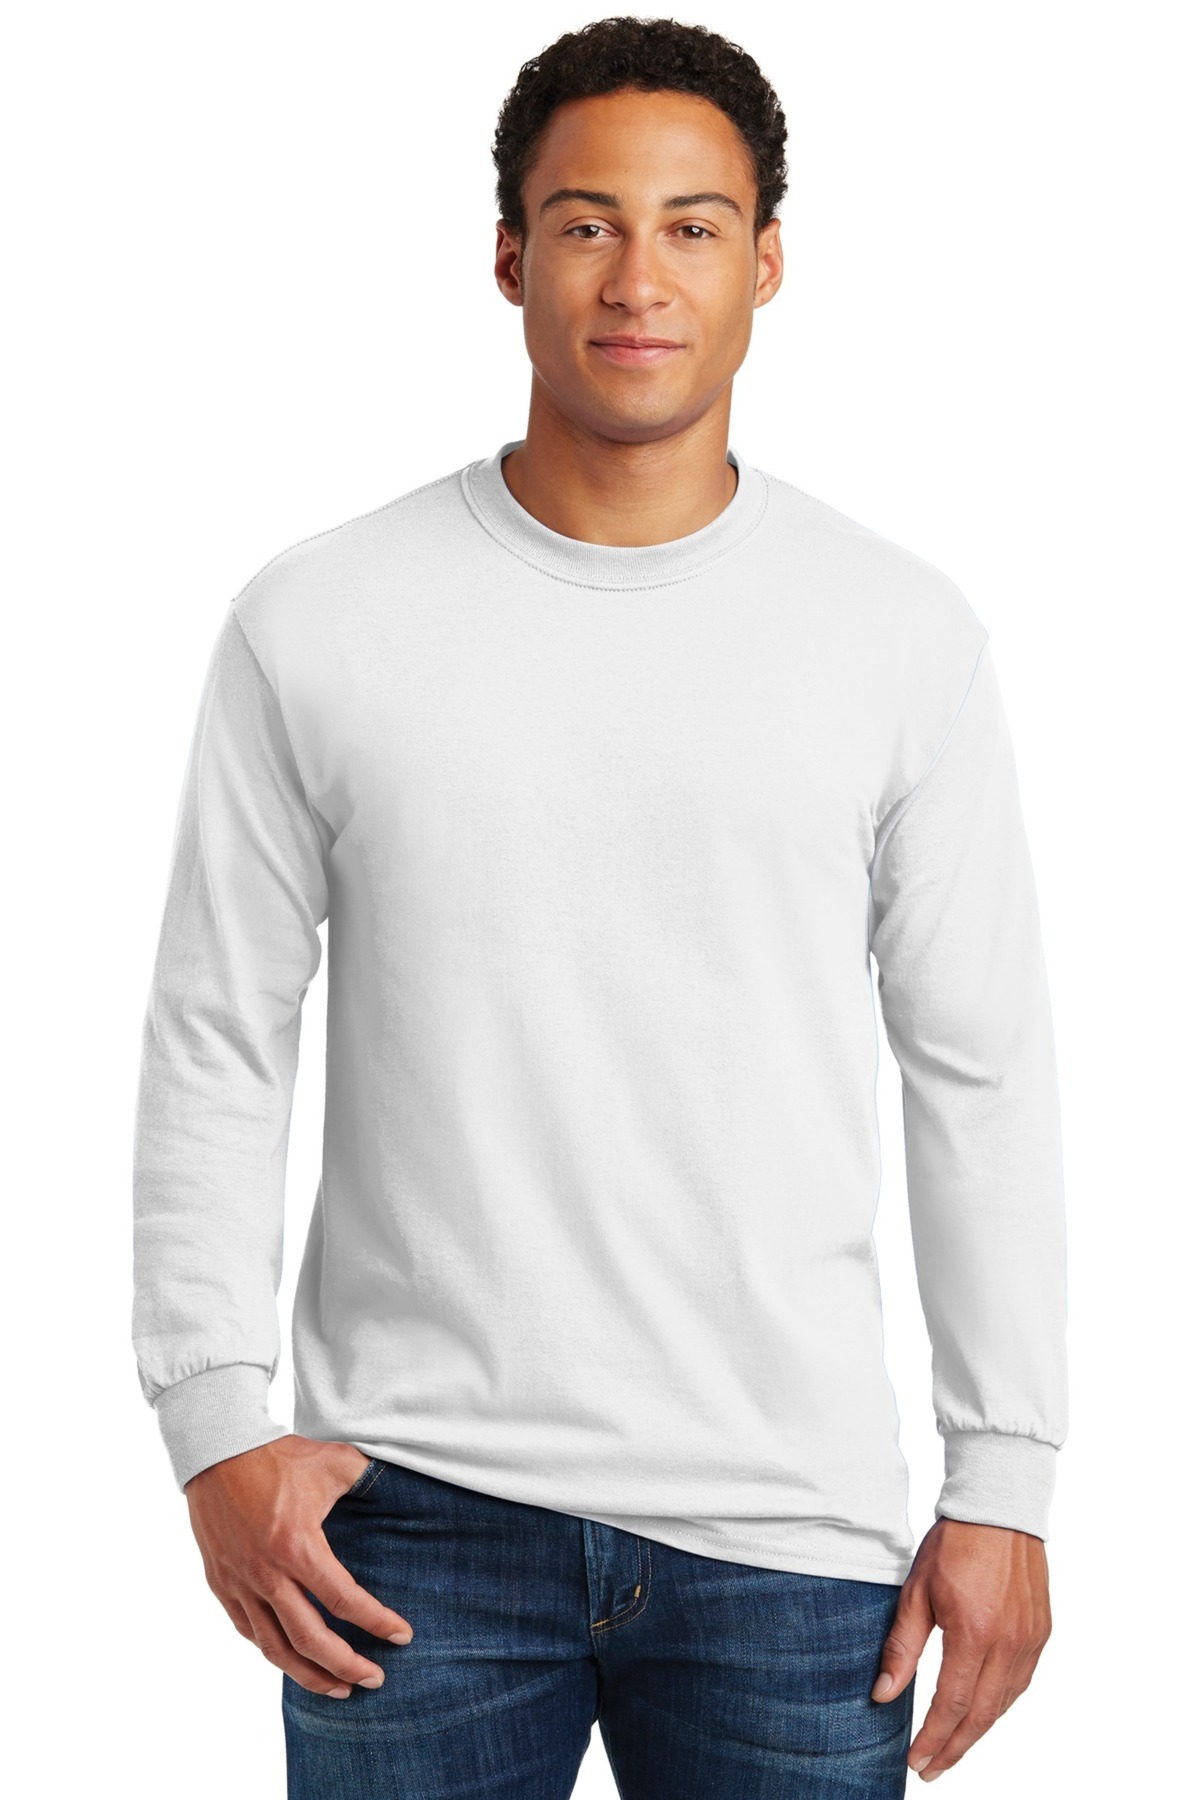 Gildan Printed Men's Heavy Cotton Long Sleeve T-Shirt | All Products ...